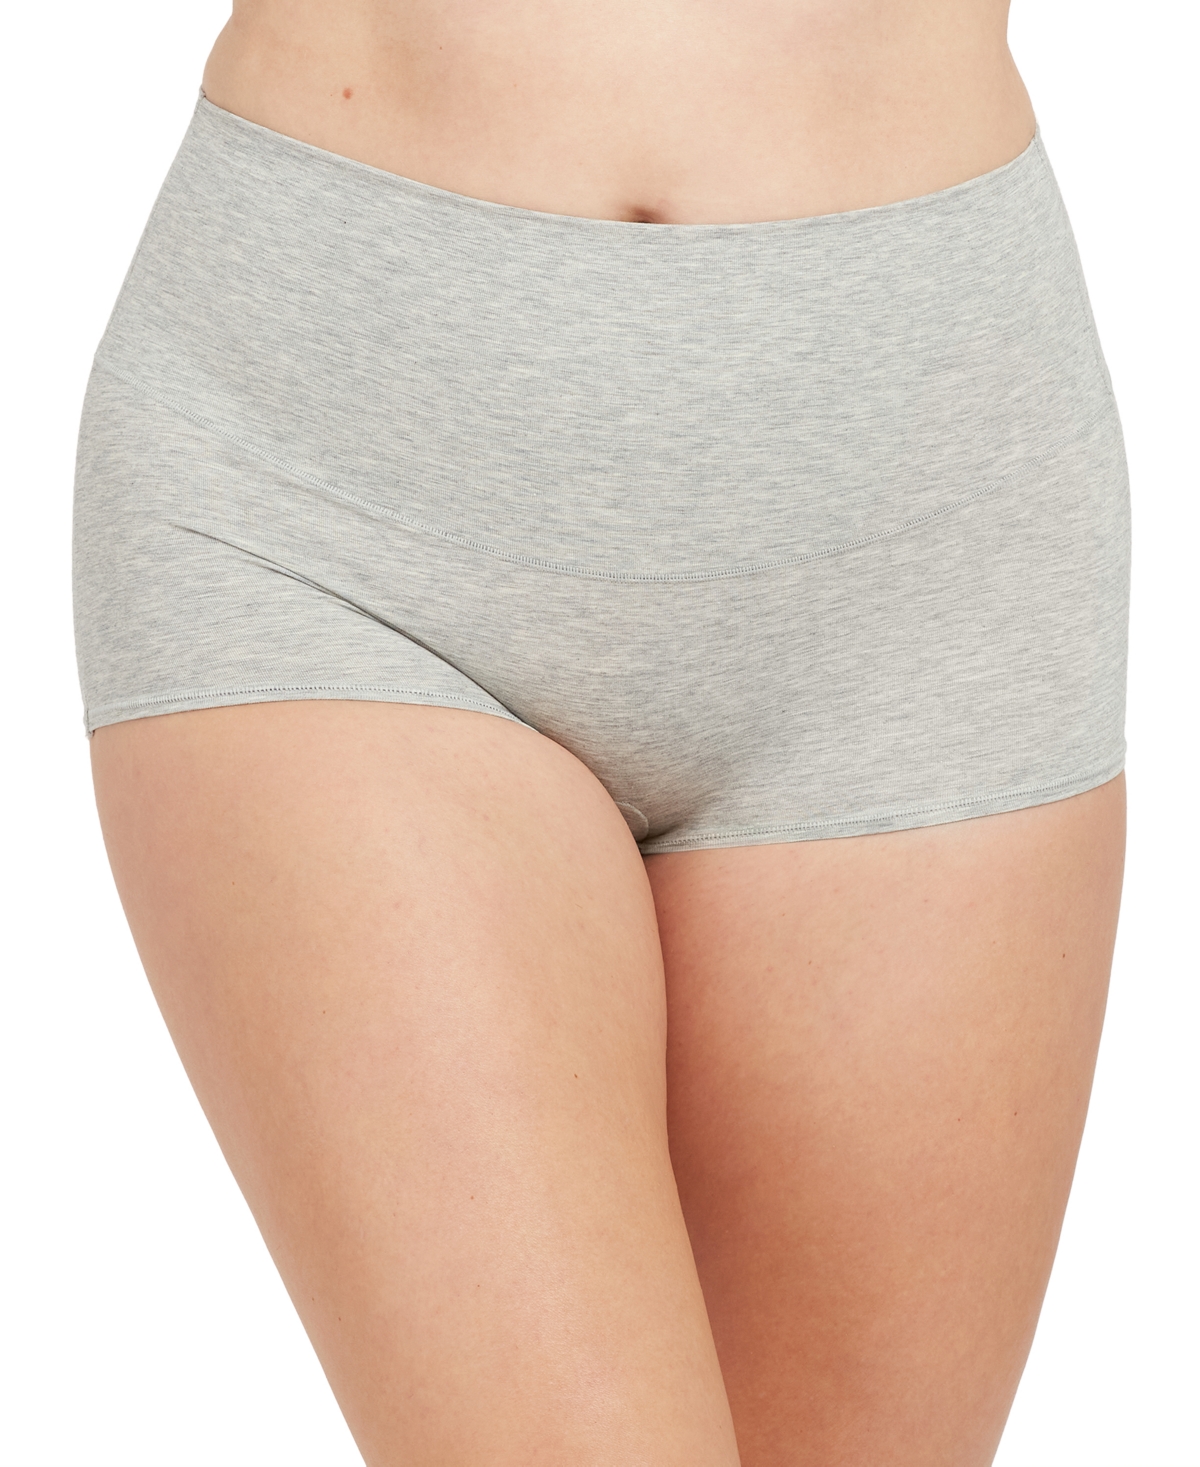 Spanx Women's Cotton Comfort Tummy Shaping Boyshort Underwear